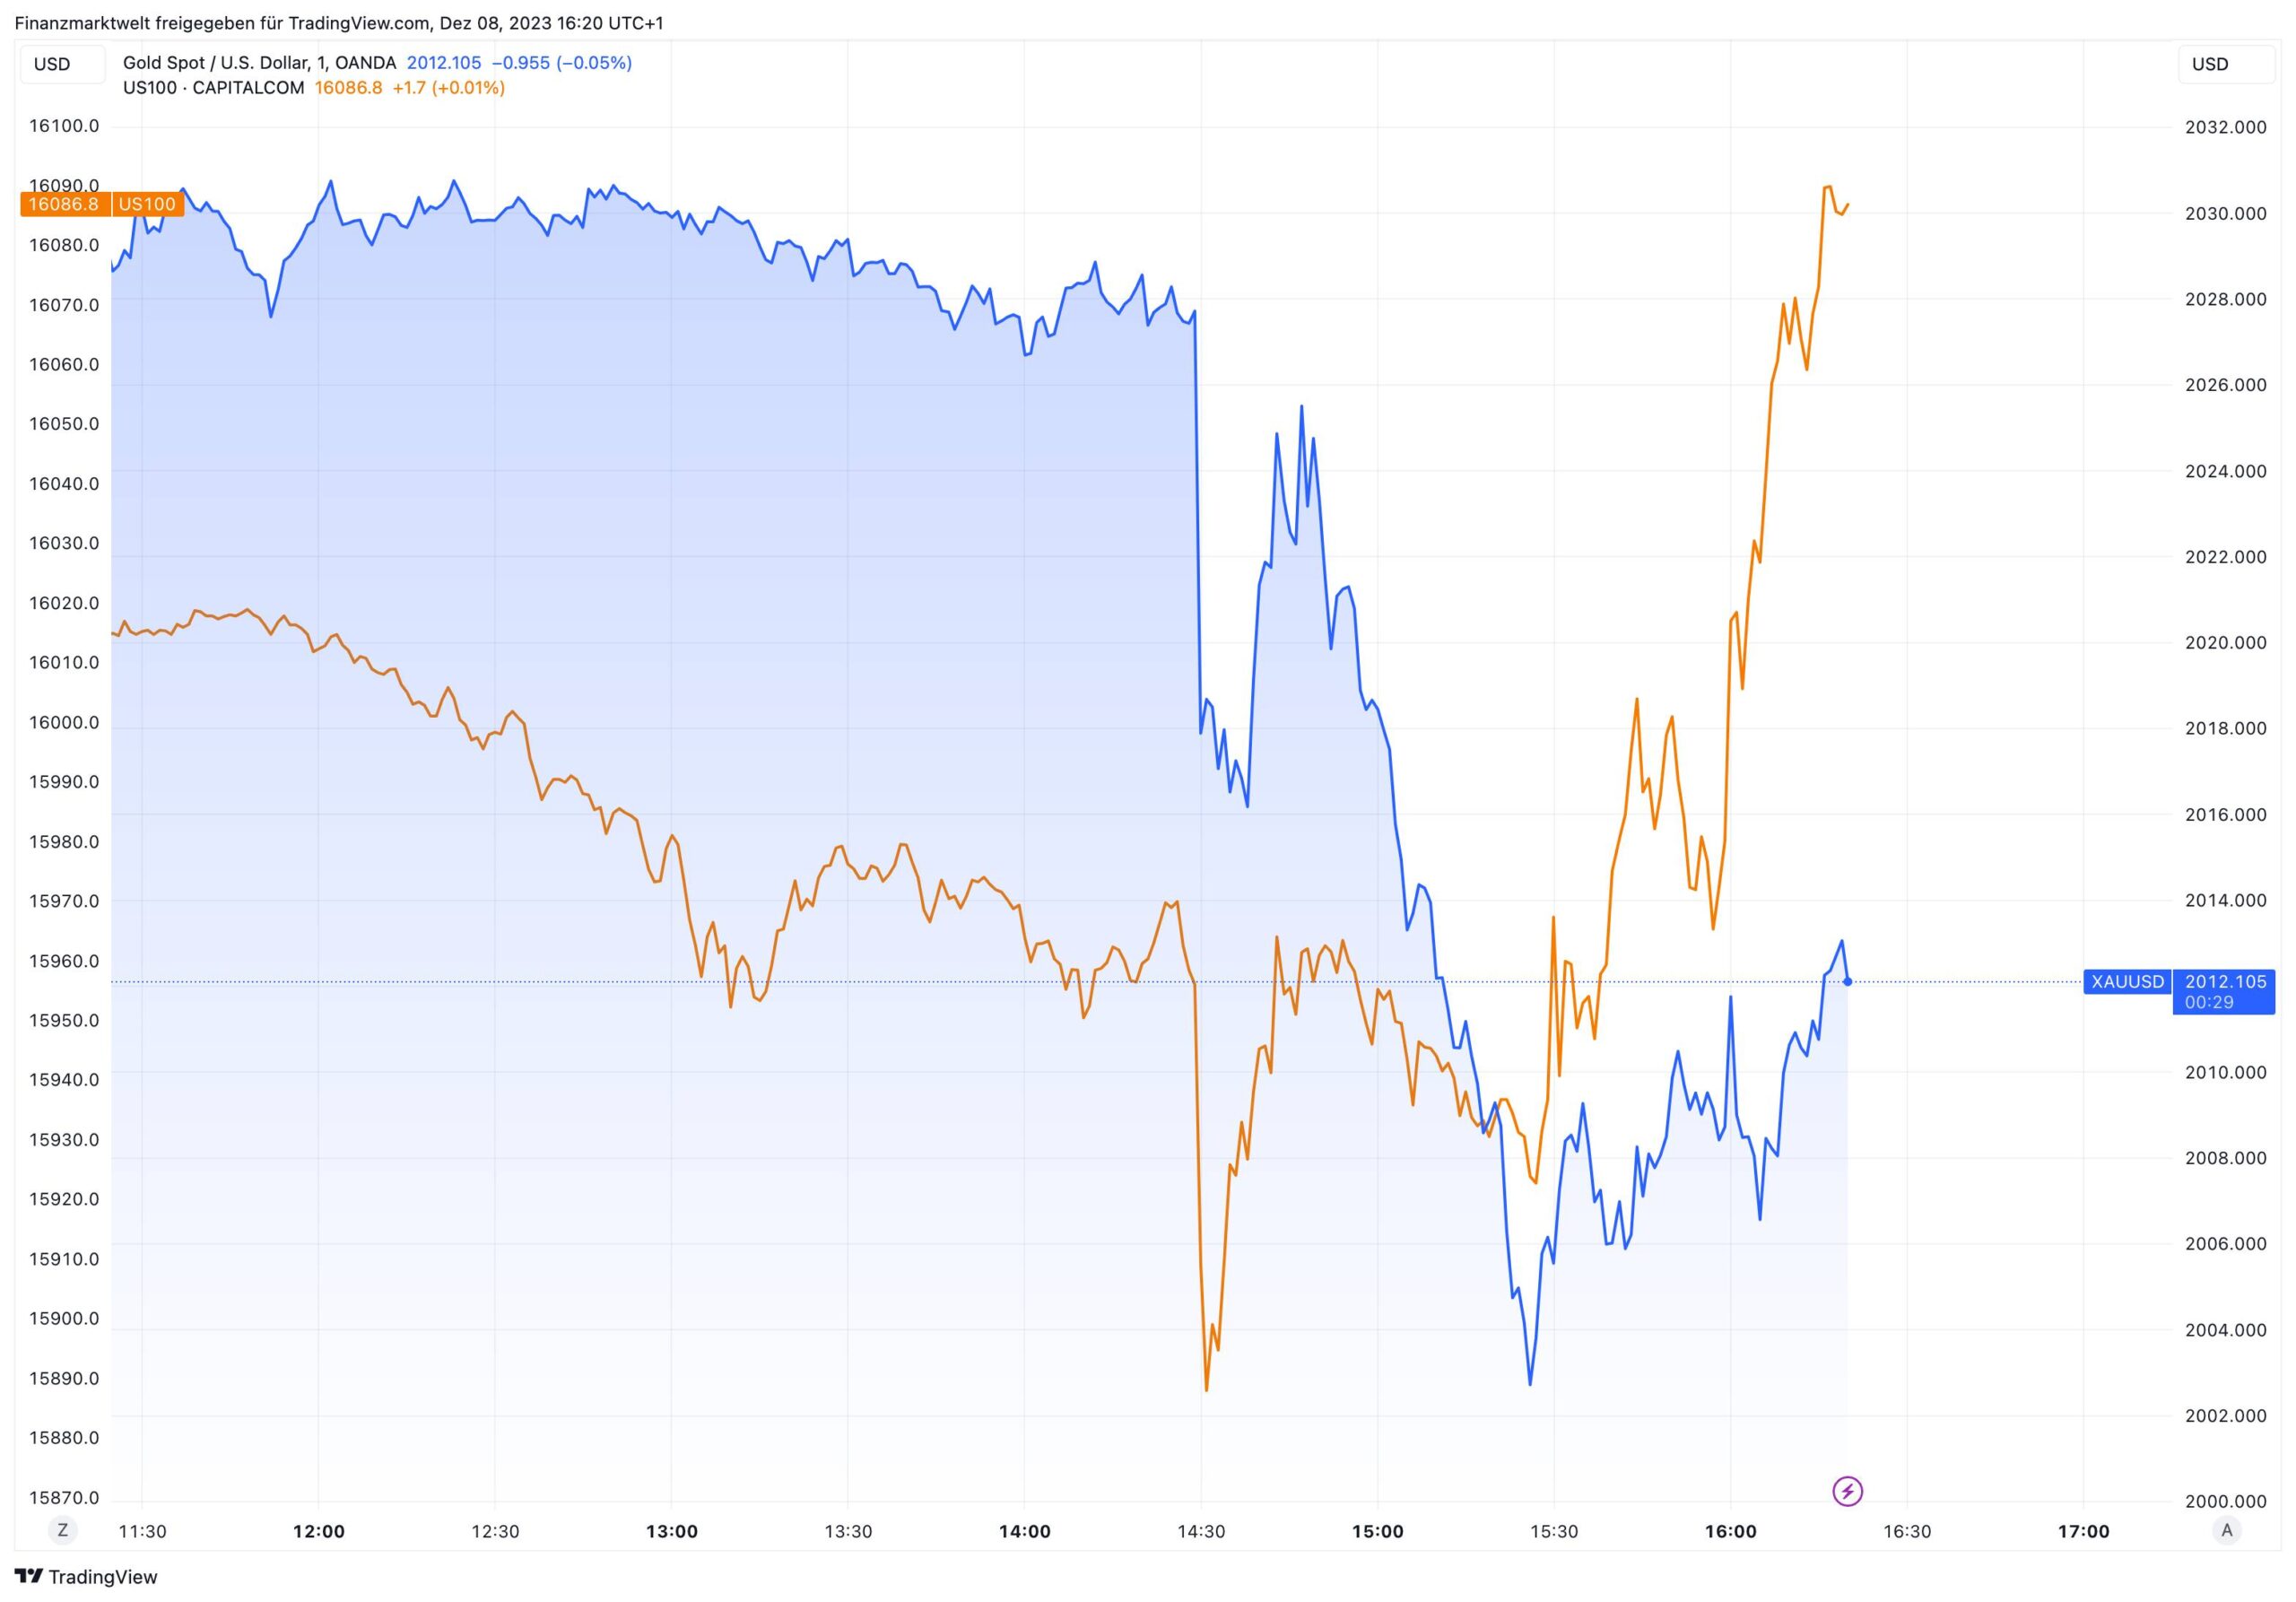 Aktienmärkte hier im Nasdaq dargestellt steigen, Gold fällt